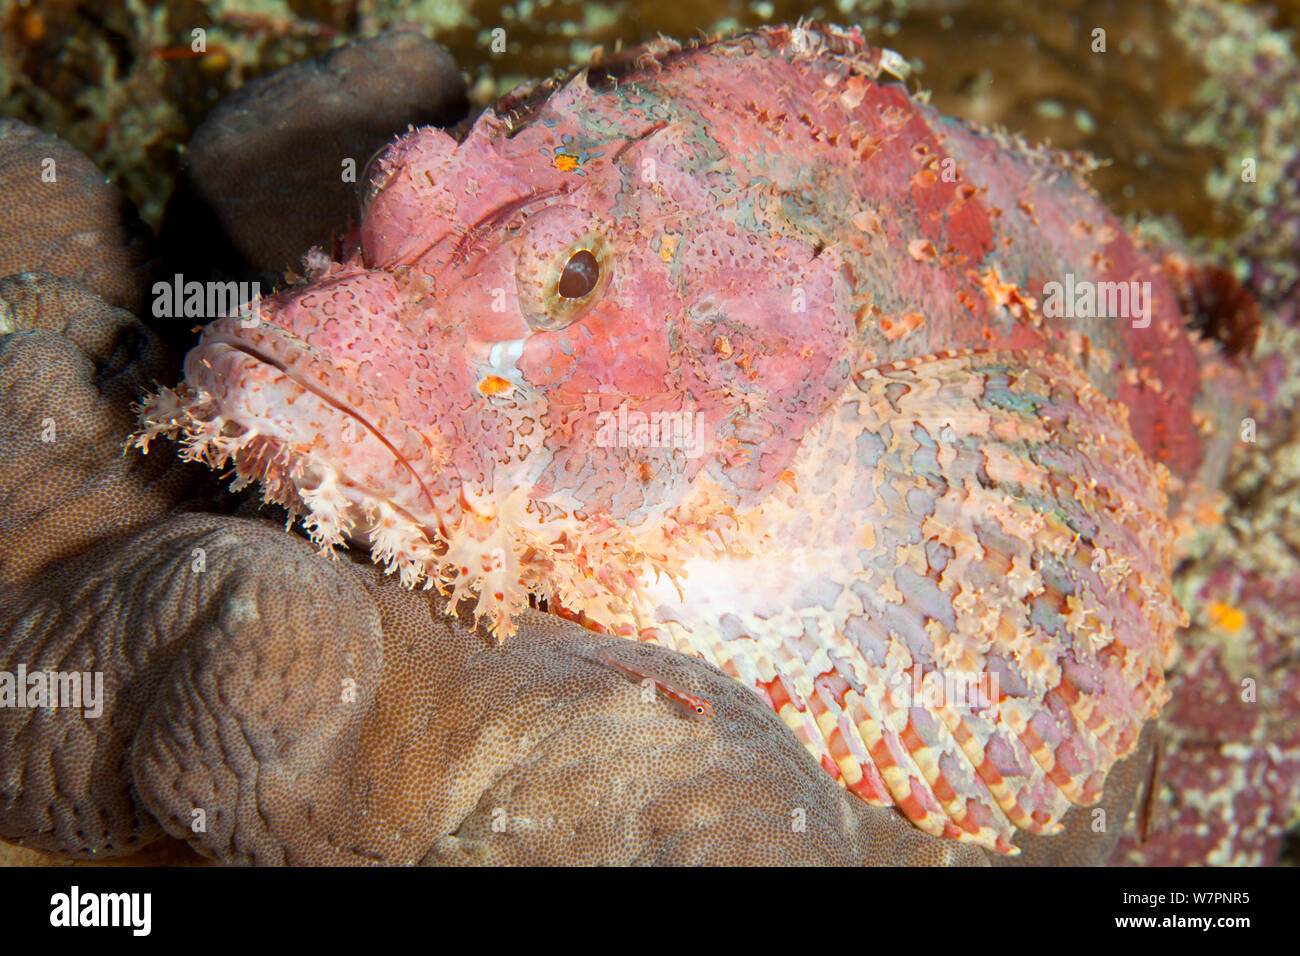 Tasseled scorpionfish (Scorpaenopsis oxycephala) Maldives, Indian Ocean Stock Photo